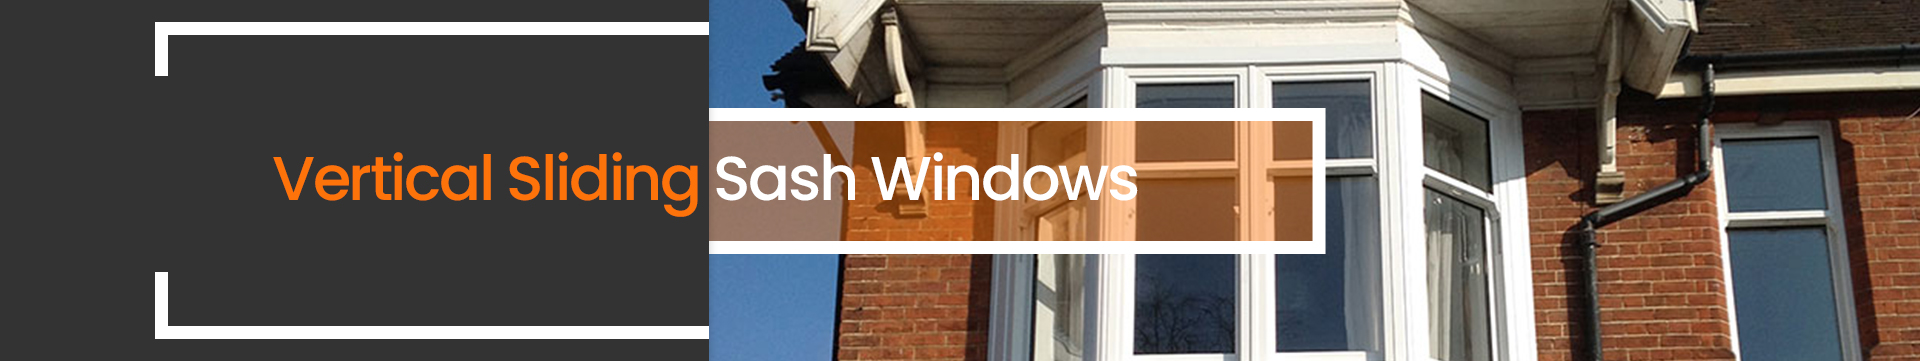 sash windows banner 1 Facelift